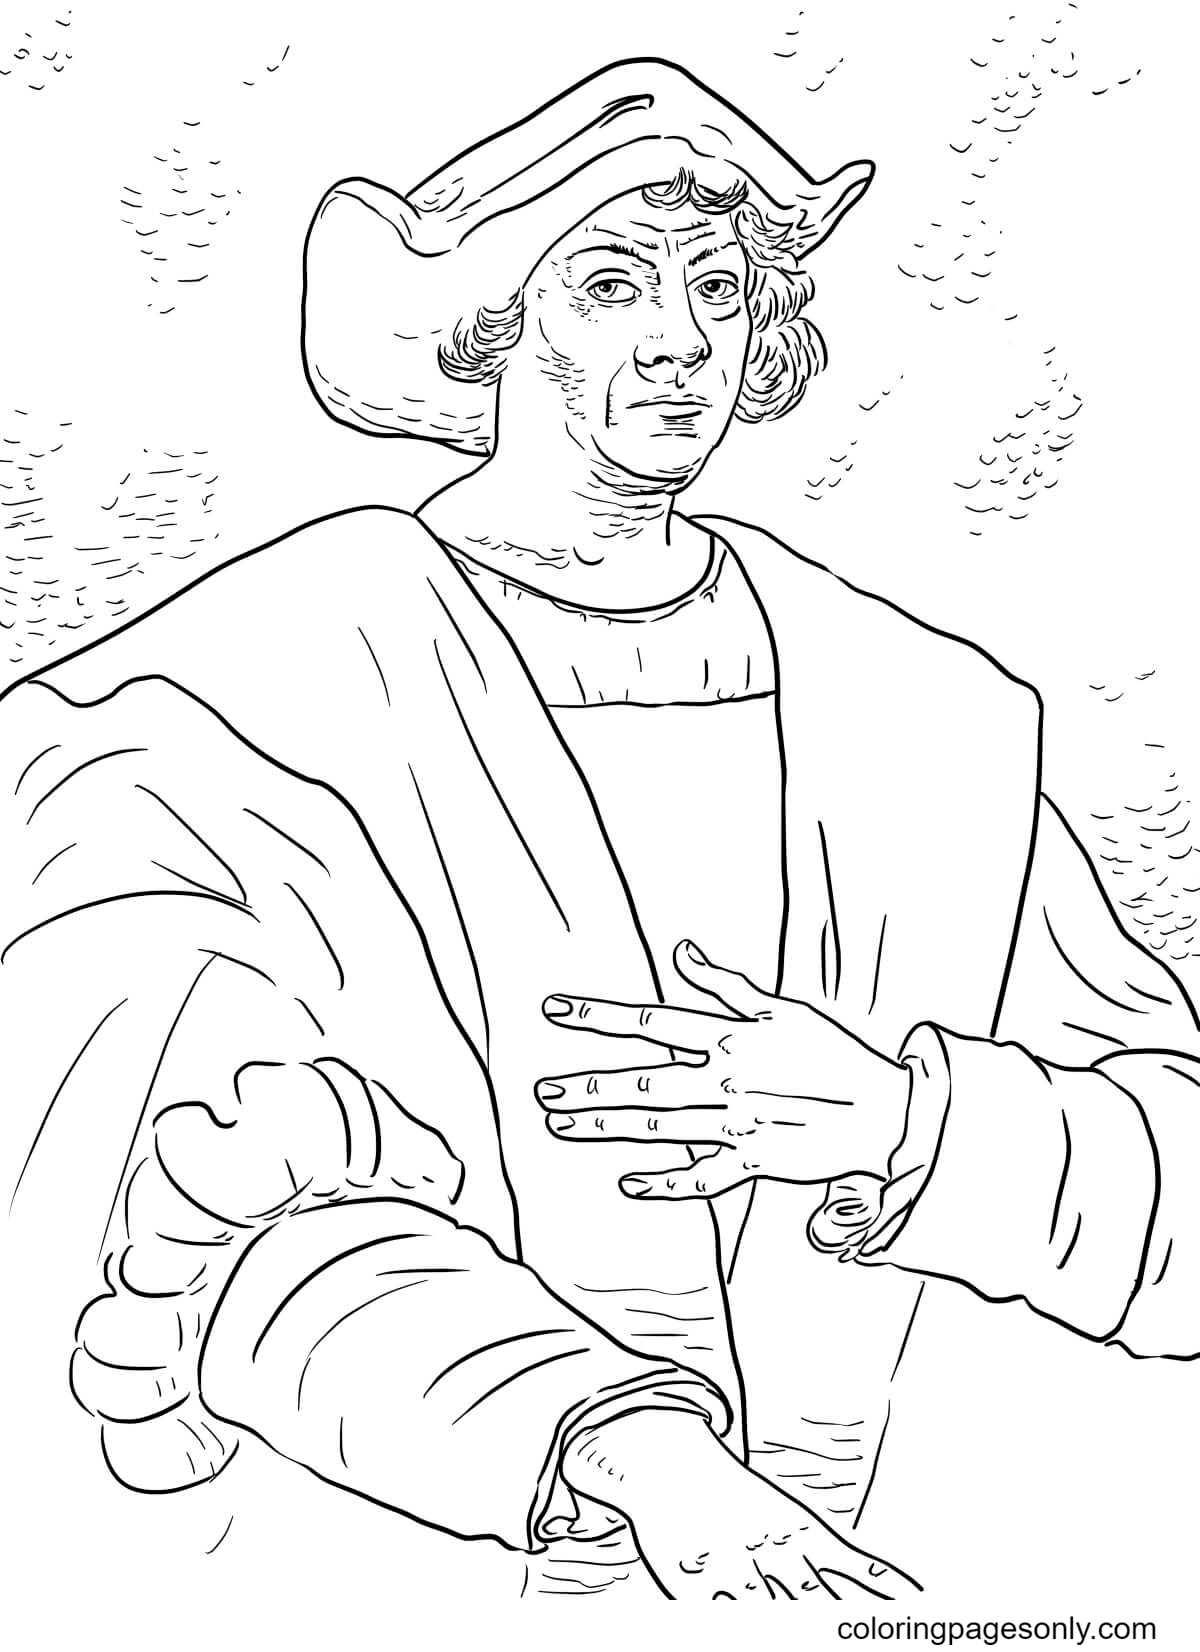 Христофор Колумб из Дня Колумба